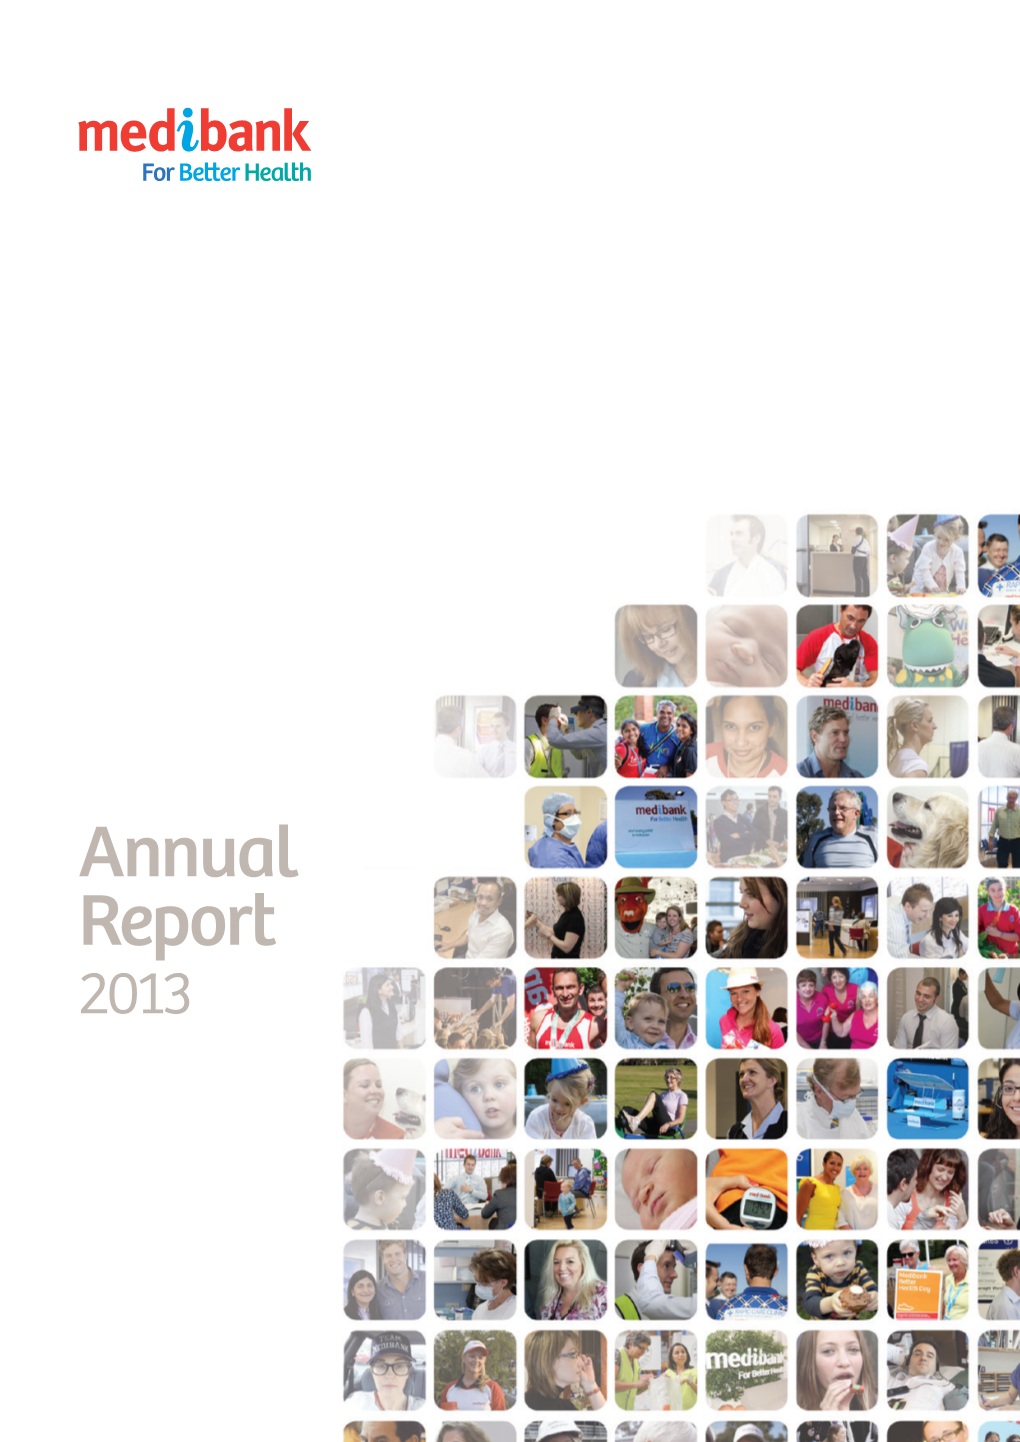 Medibank Annual Report 2013